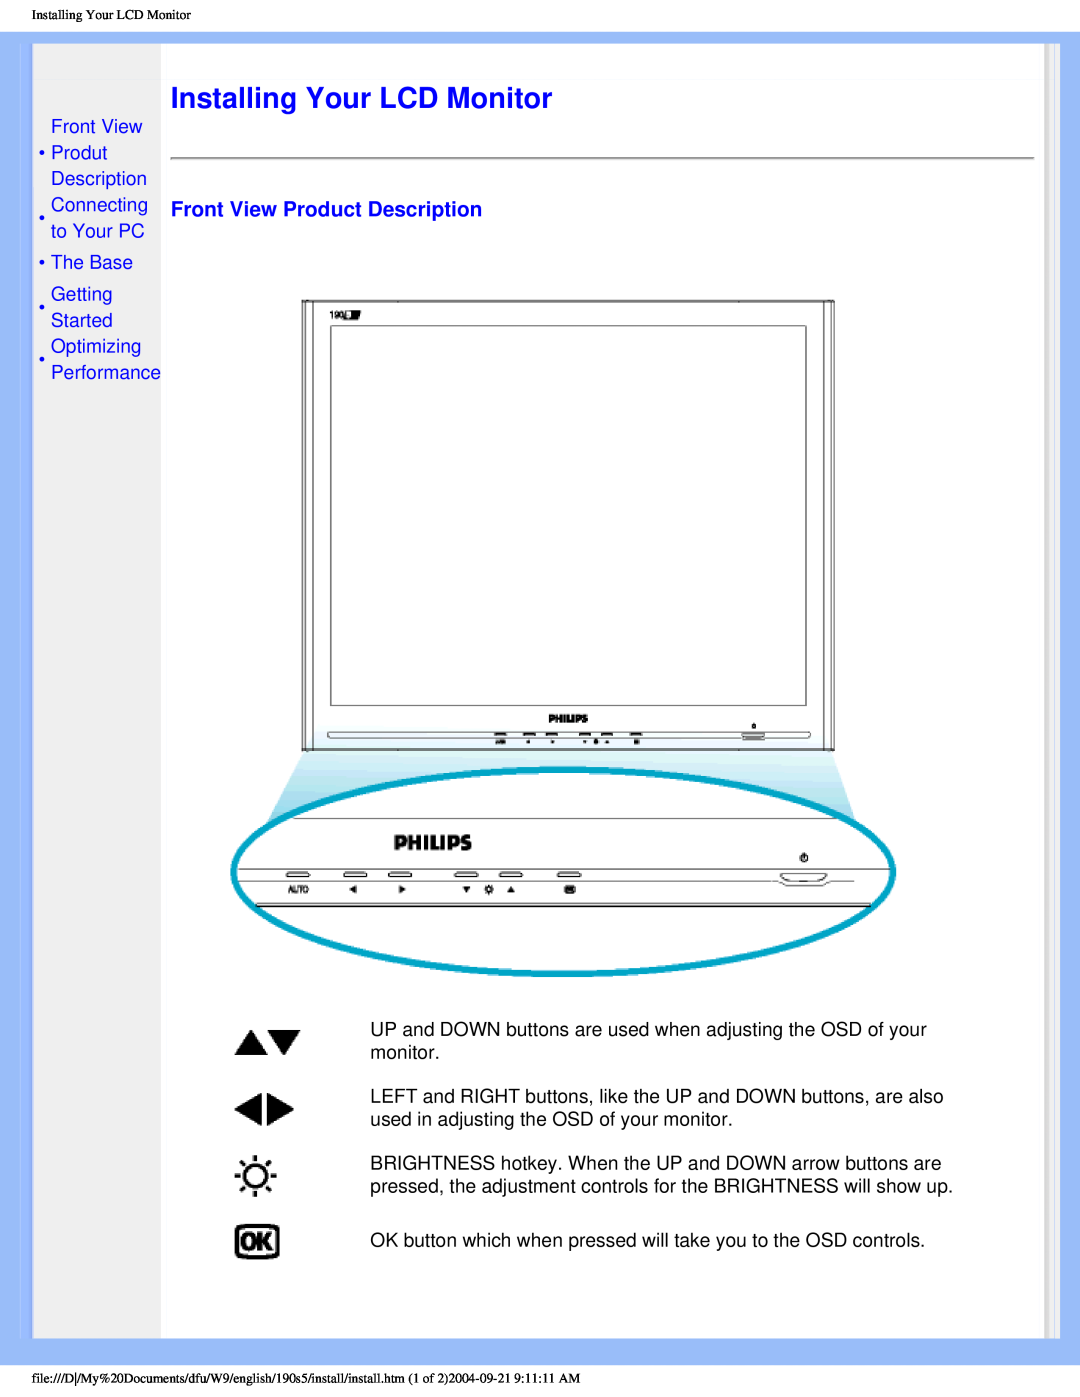 Philips 190S5 user manual Installing Your LCD Monitor, Front View Product Description, Front View Produt Description 